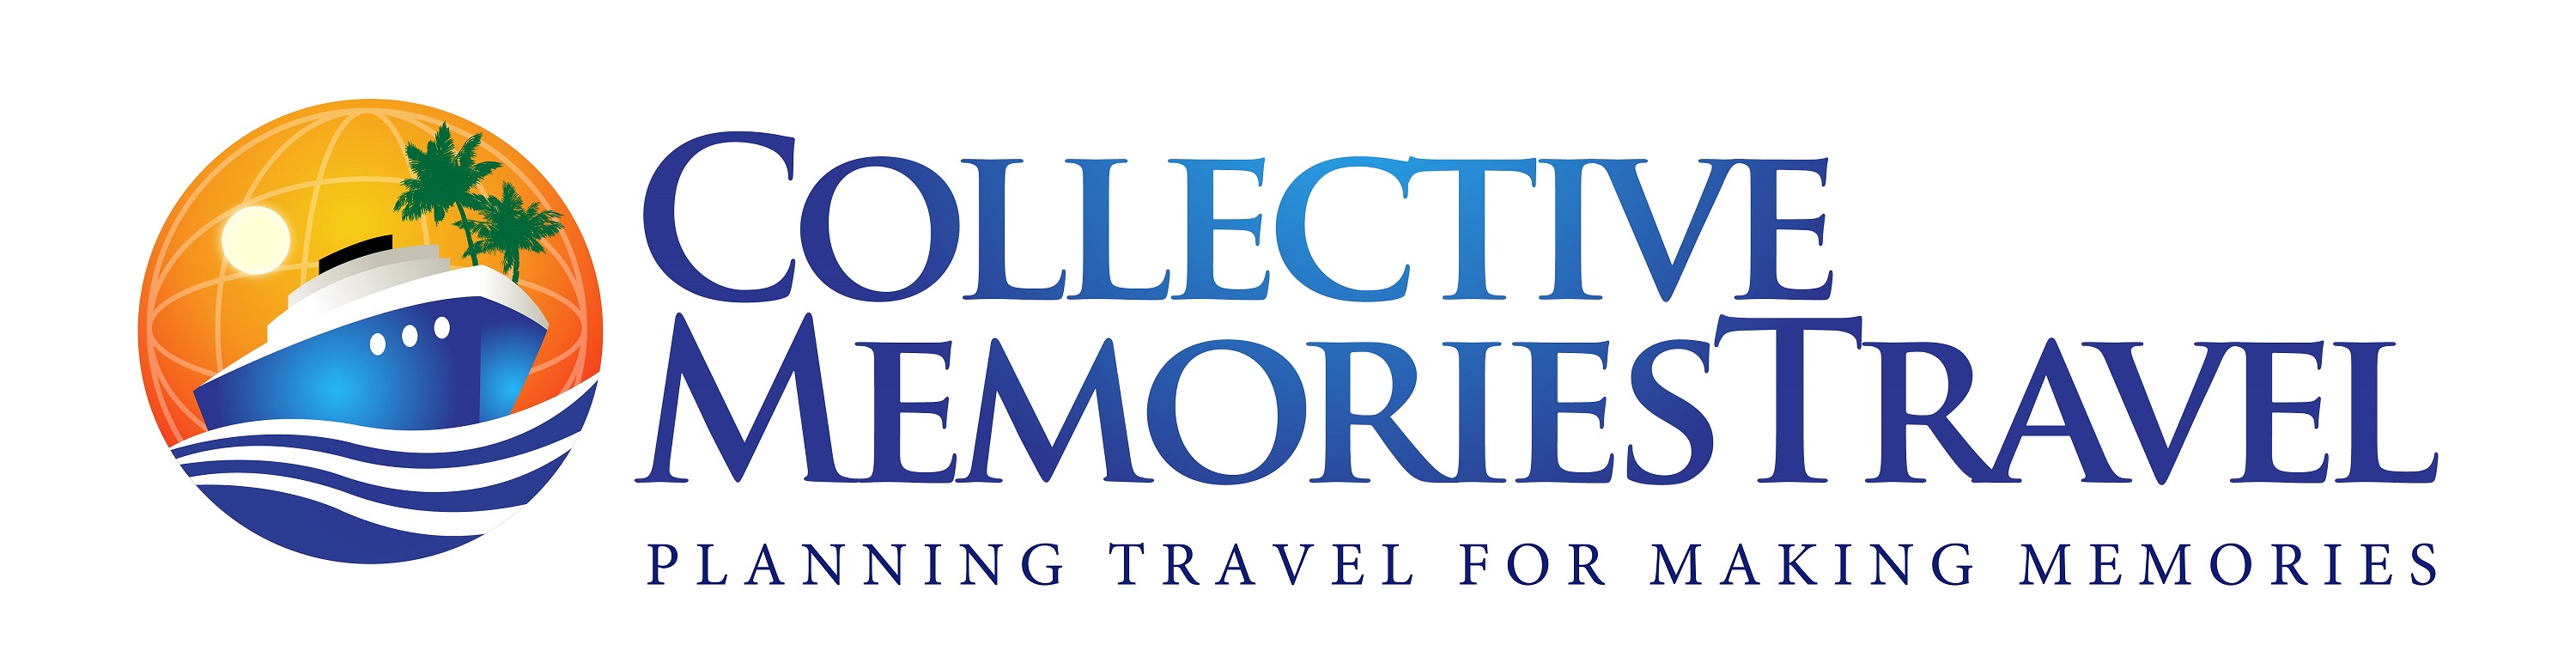 Collective Memories Travel, LLC